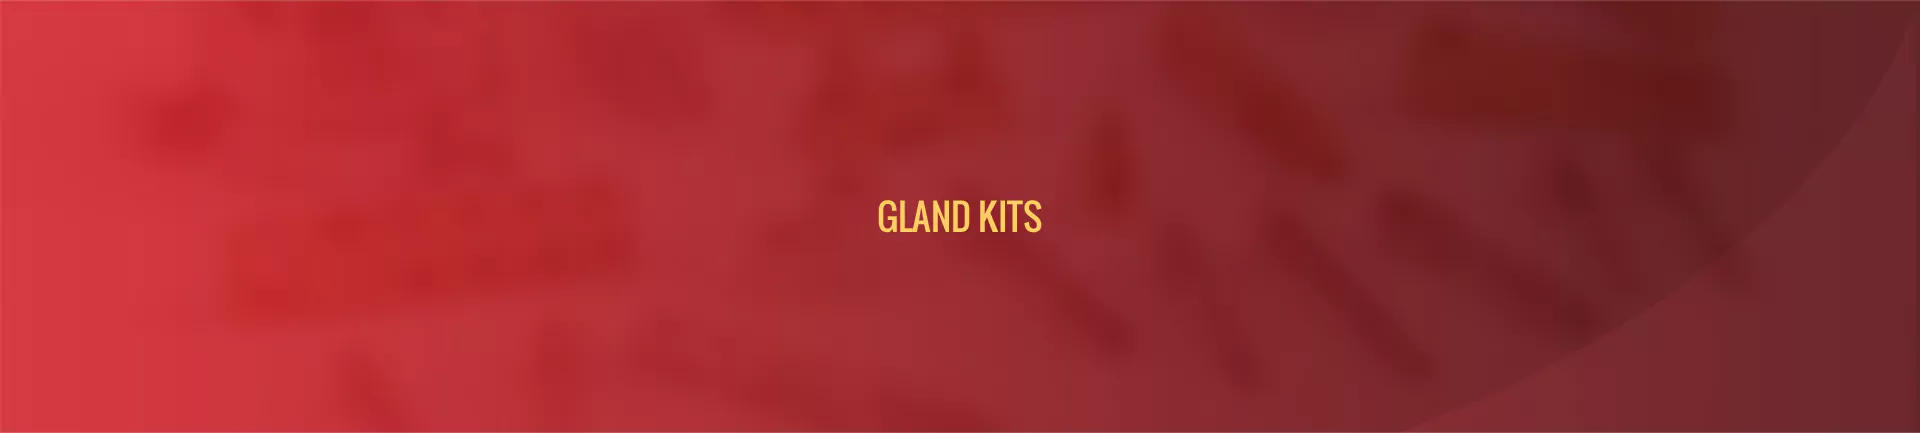 gland-kits-banner